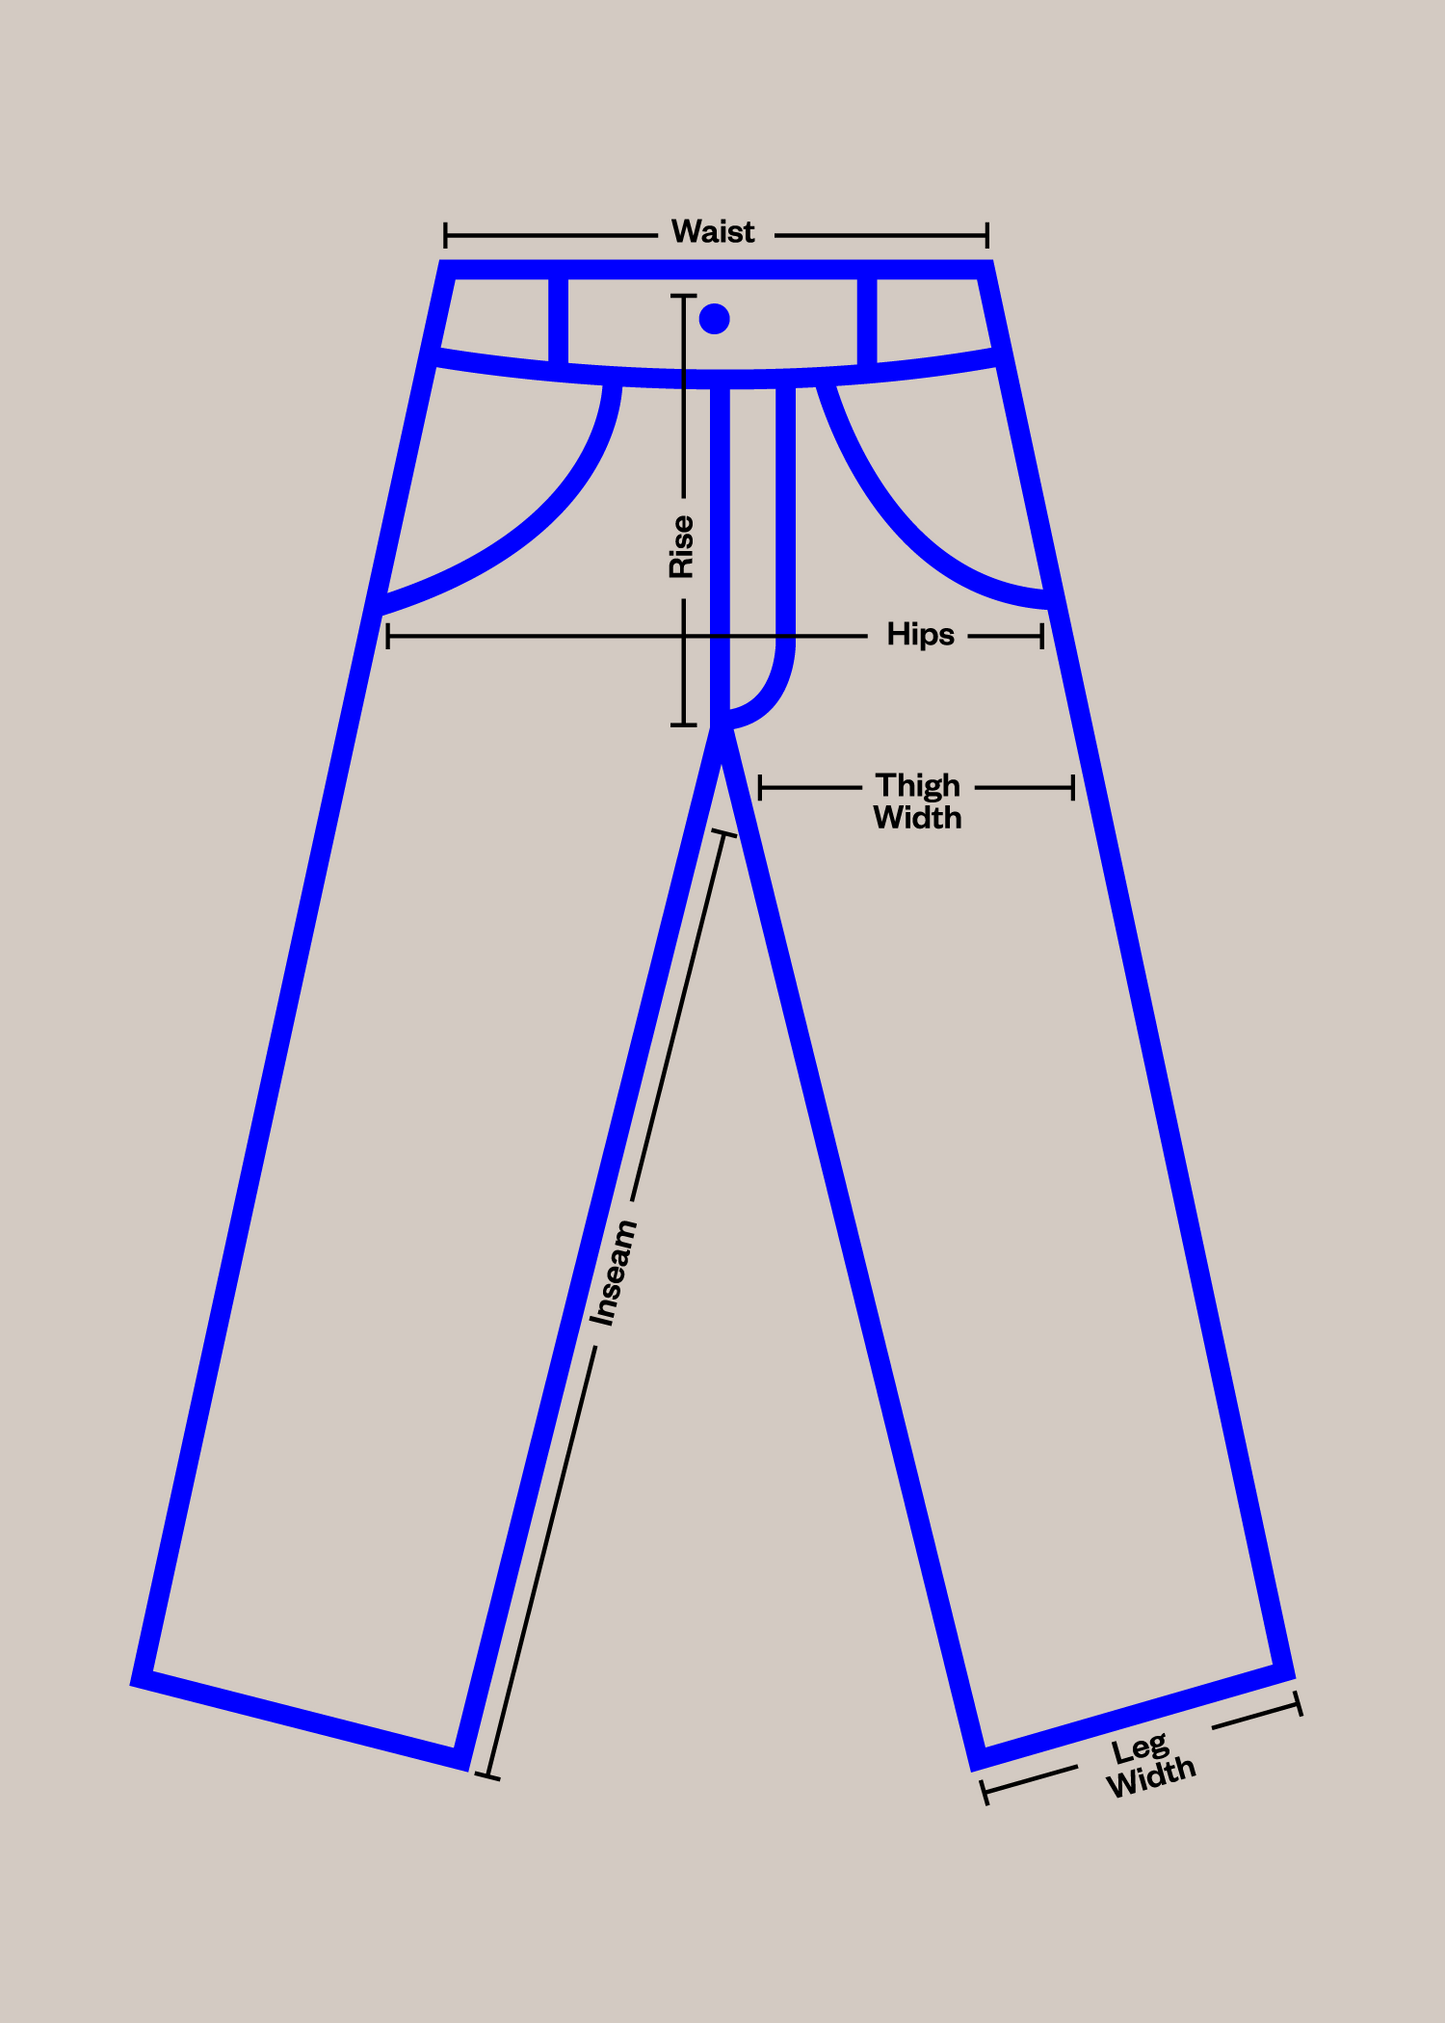 1980s French Workwear Chore Pants Size Women's 30 Men's 32